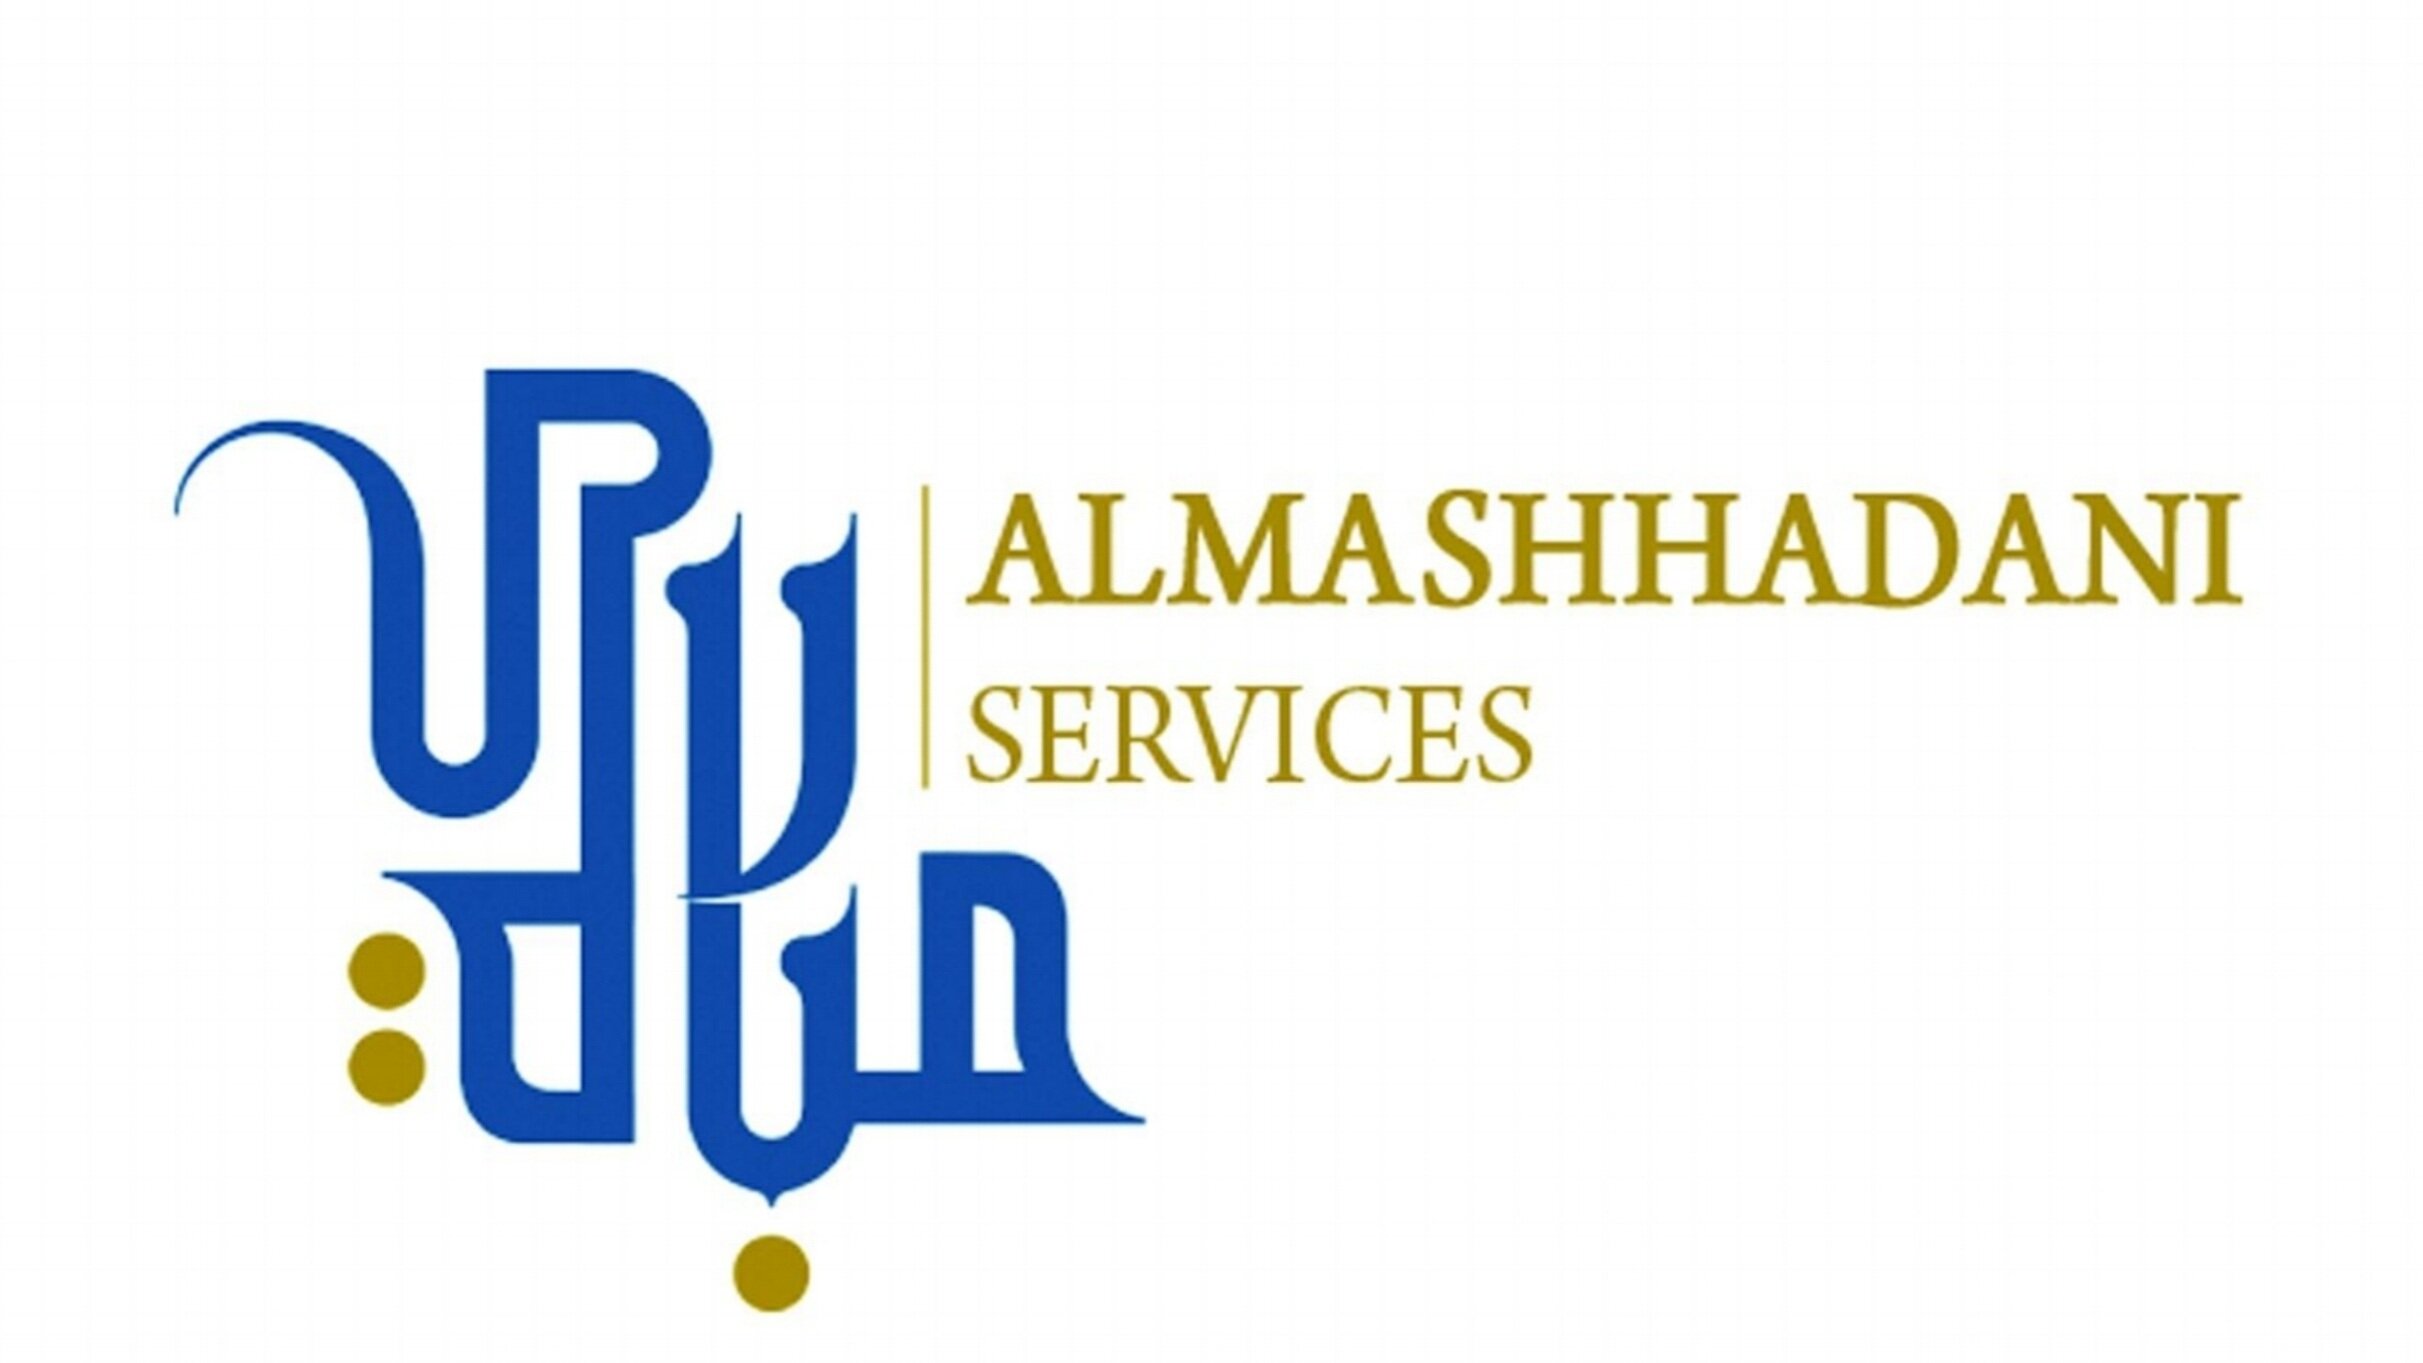 ALMASHHADANI SERVICES